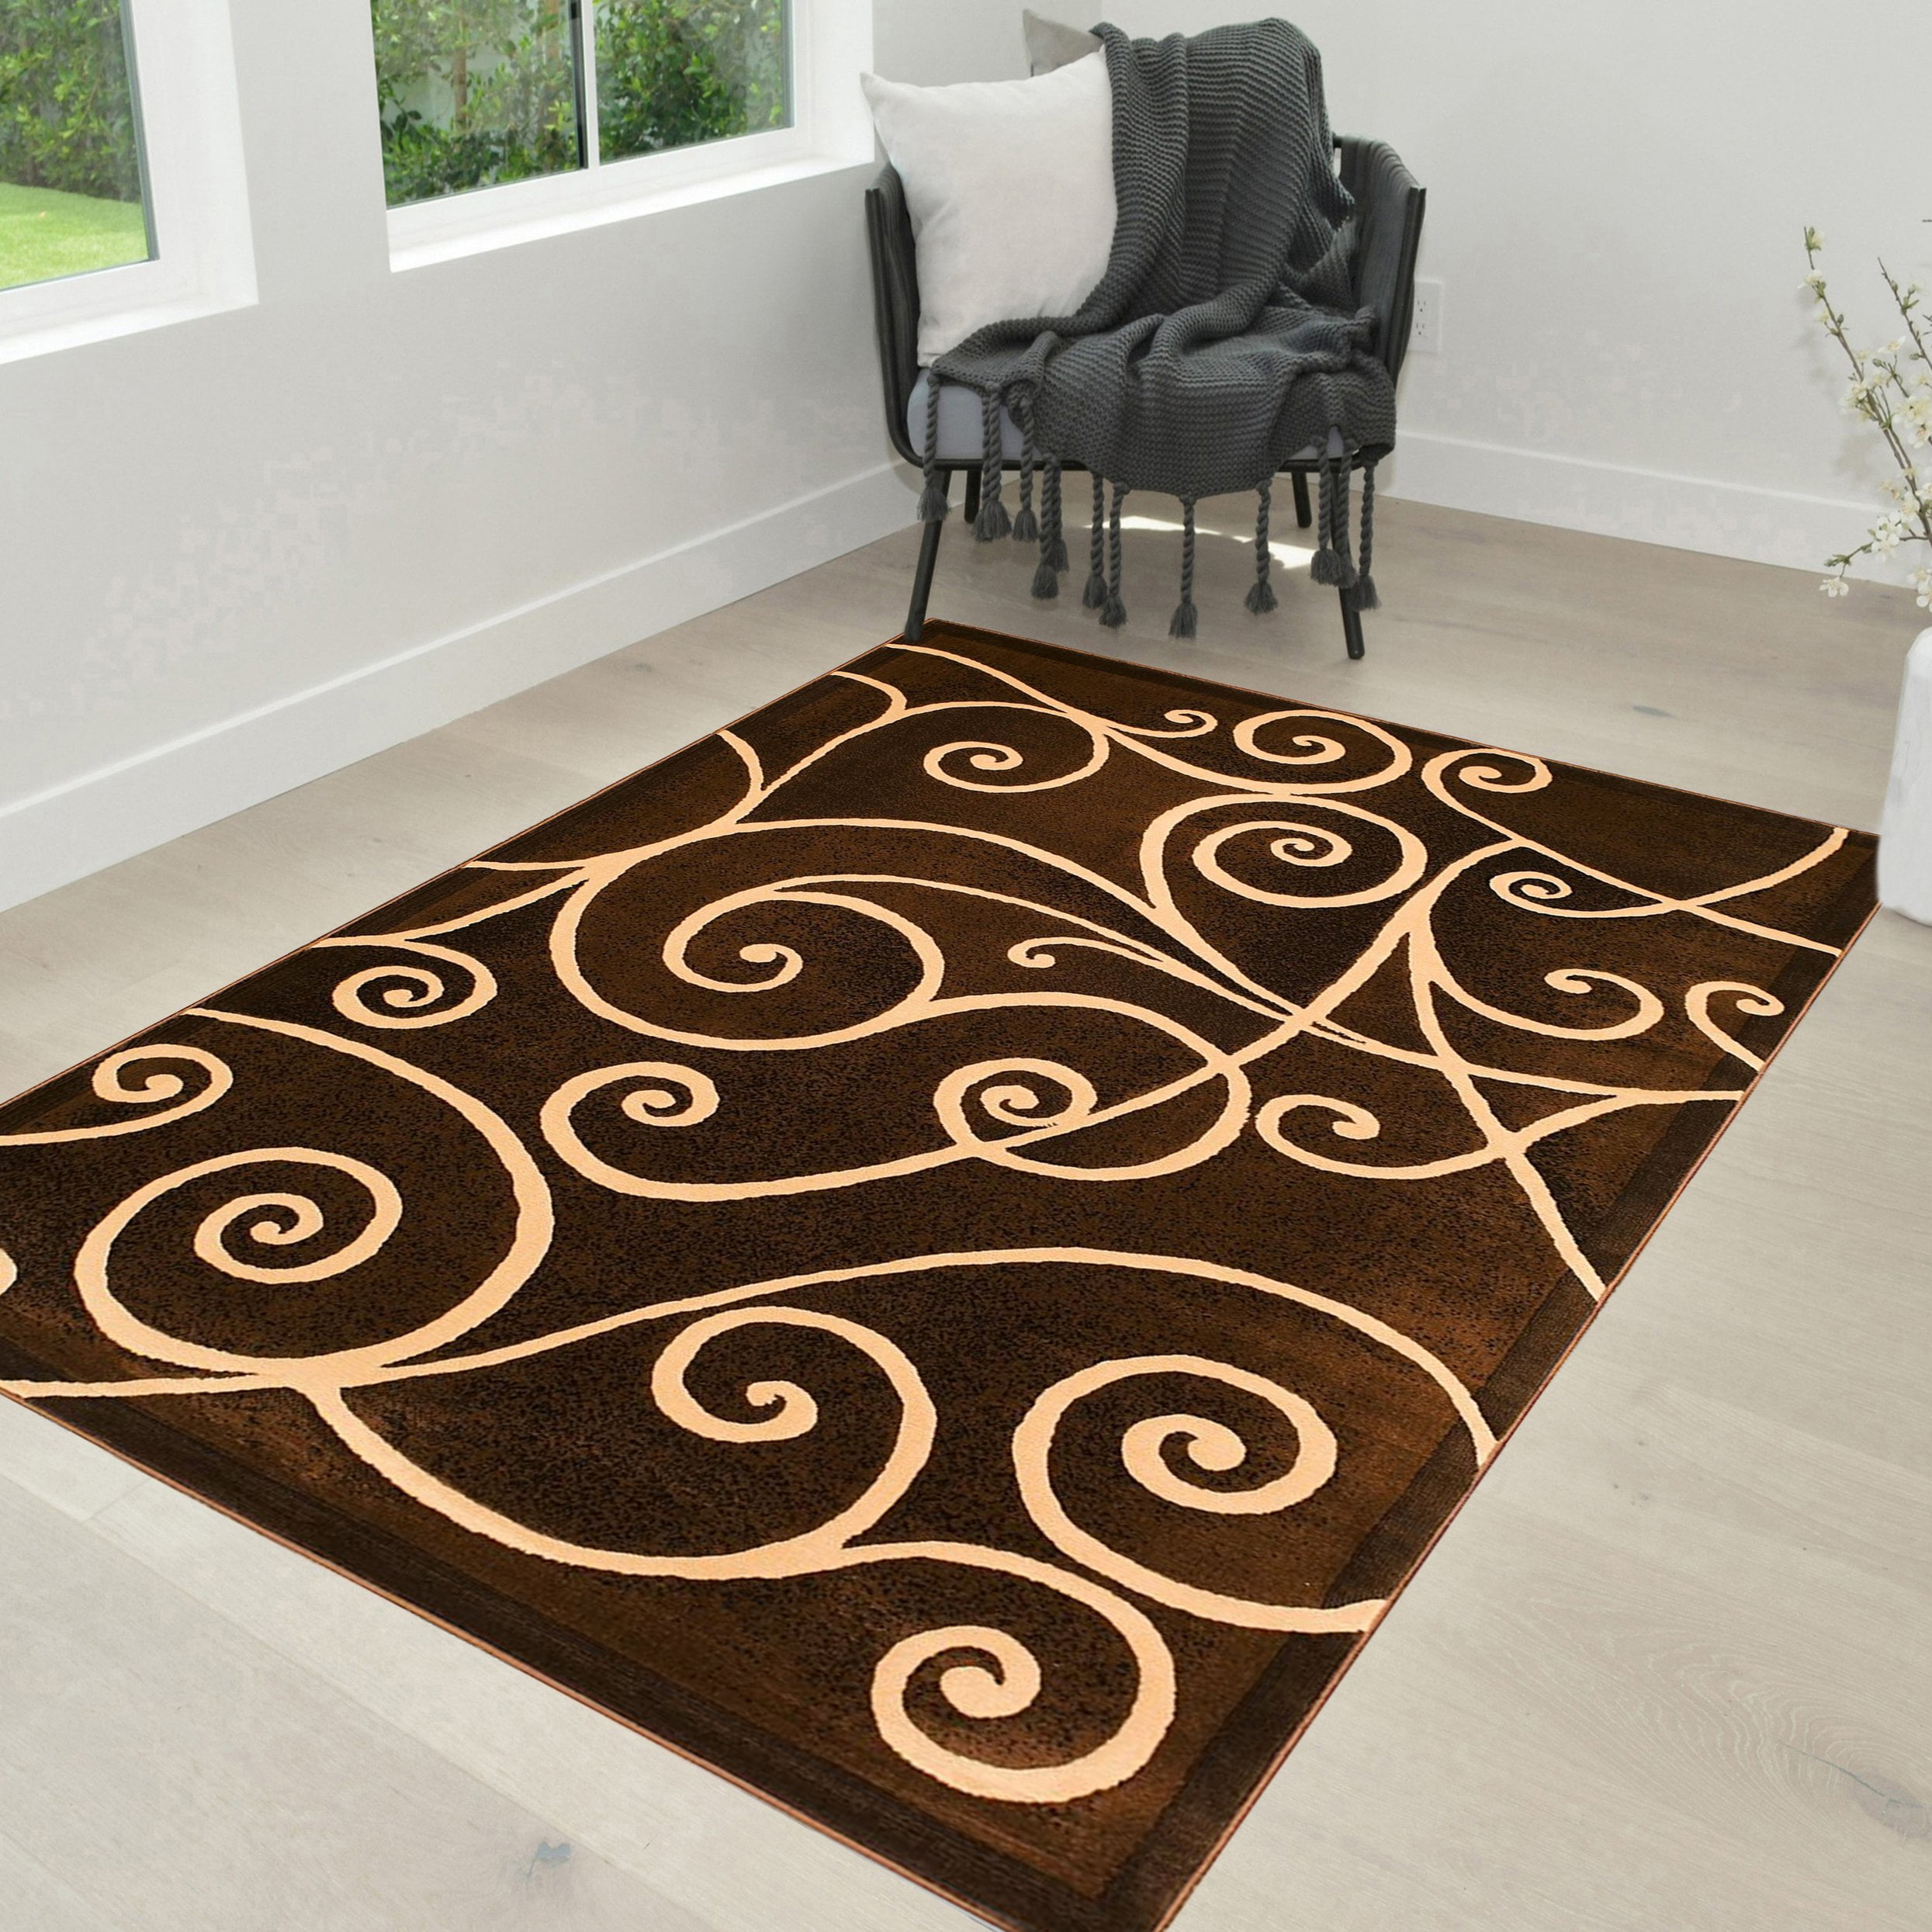 Swirls 3D Carved Modern Luxury Thick Silky Soft Pile Floor Room Rug Beige Brown 